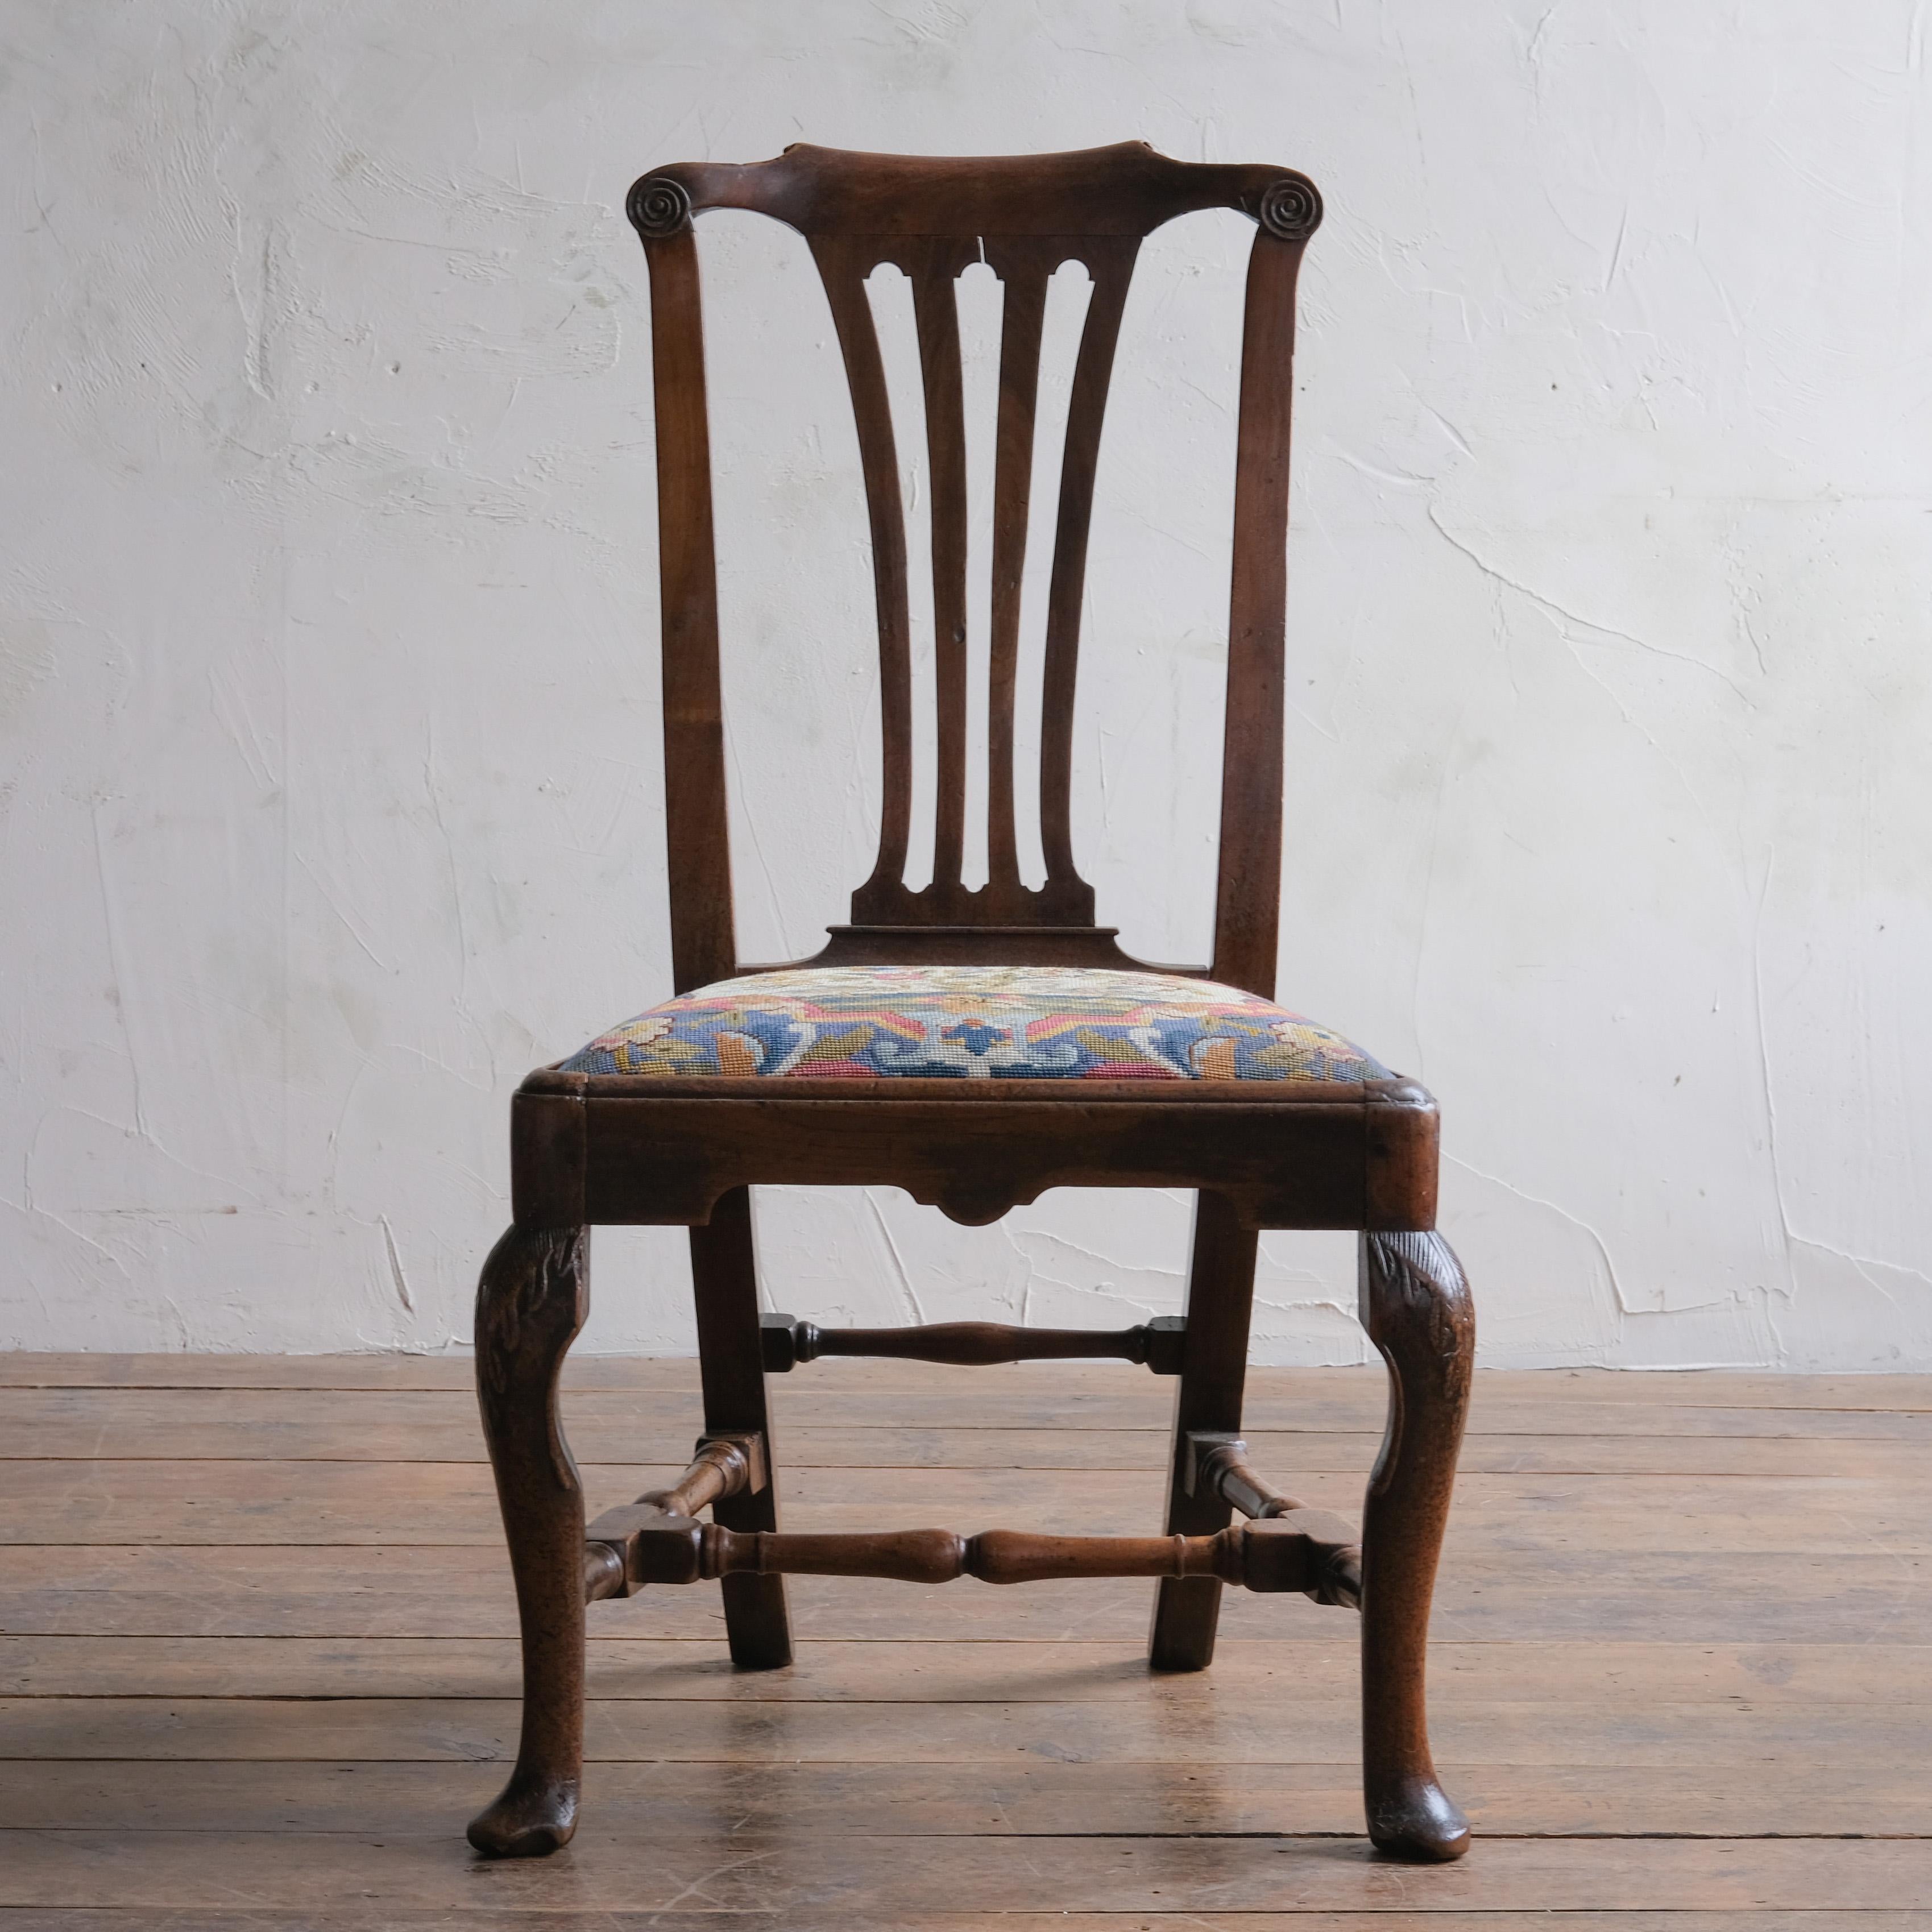 British George II Walnut Chair with Needlework Seat Pad